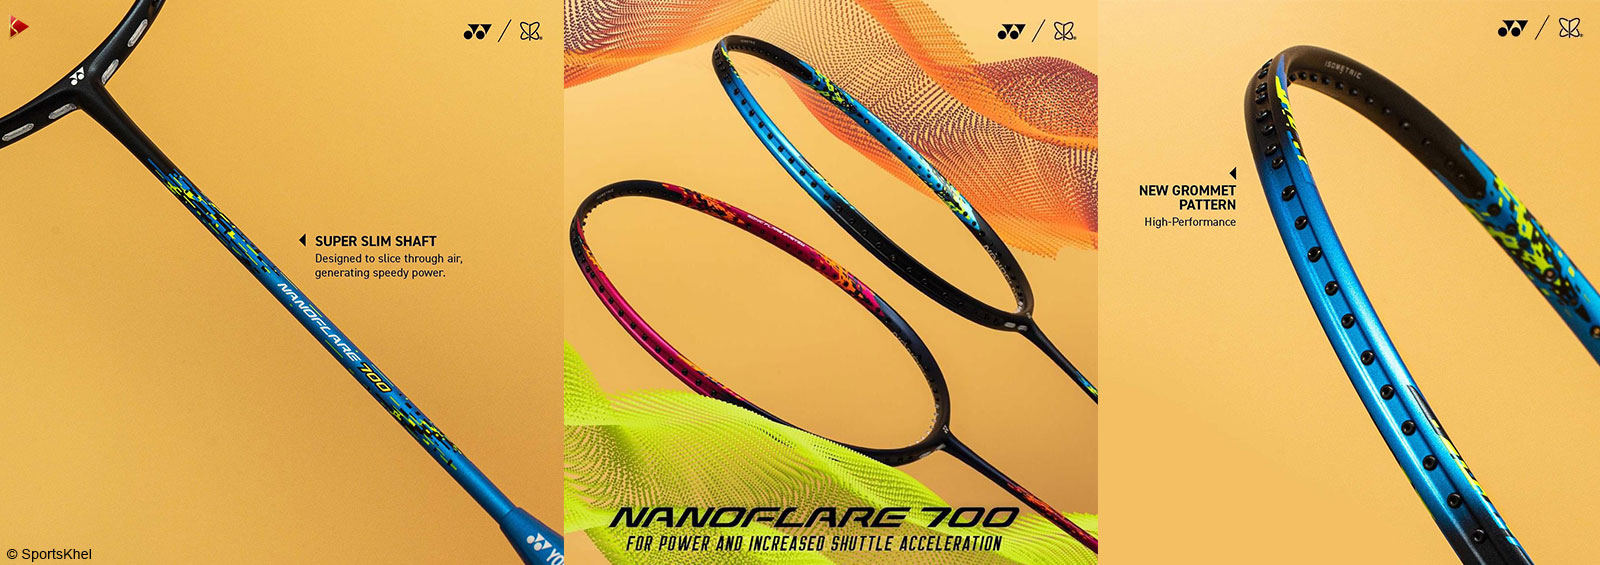 Yonex Nanoflare 700 Badminton Racket Features